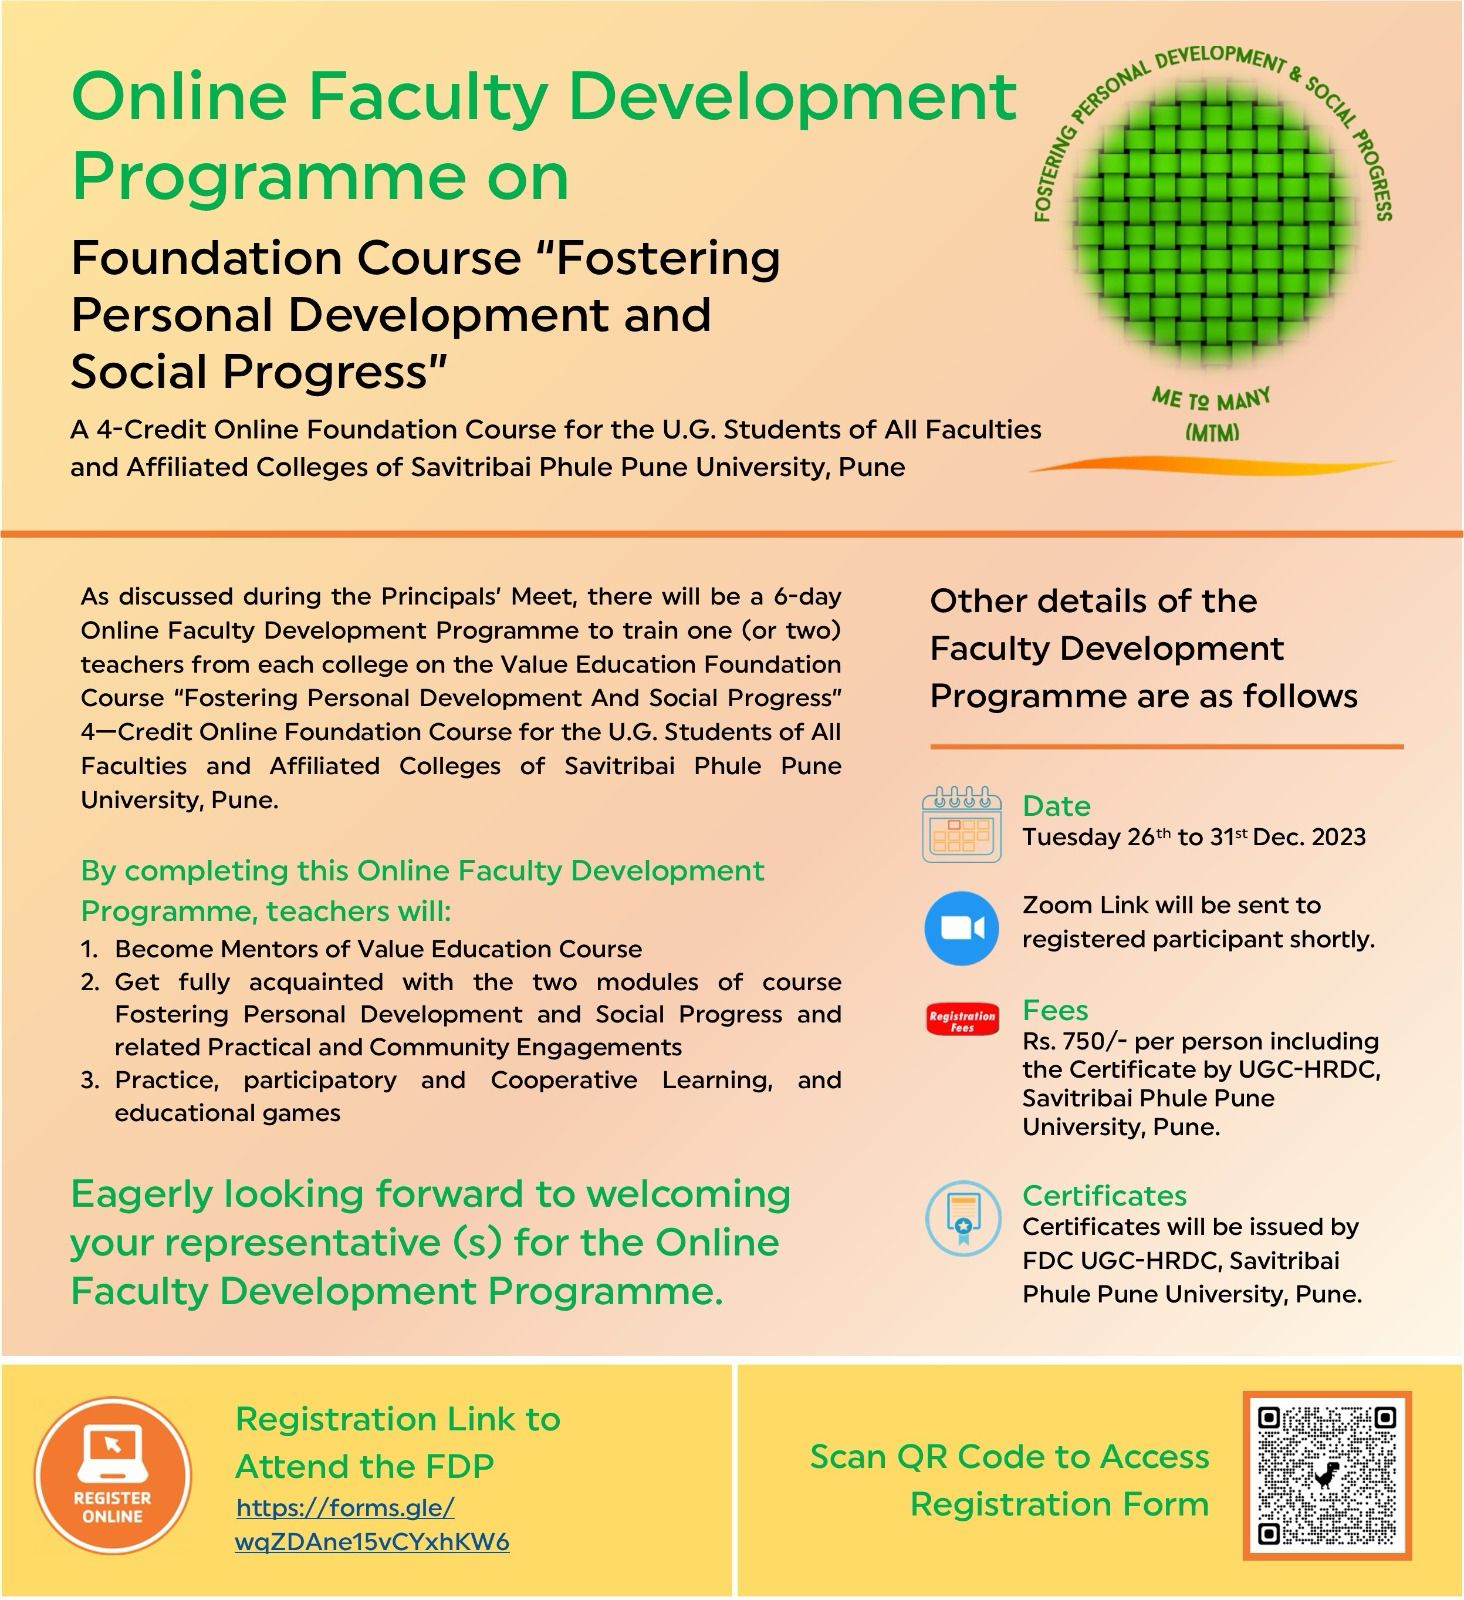 Online Faculty & Students Development Program 26 to 31 Dec 2023